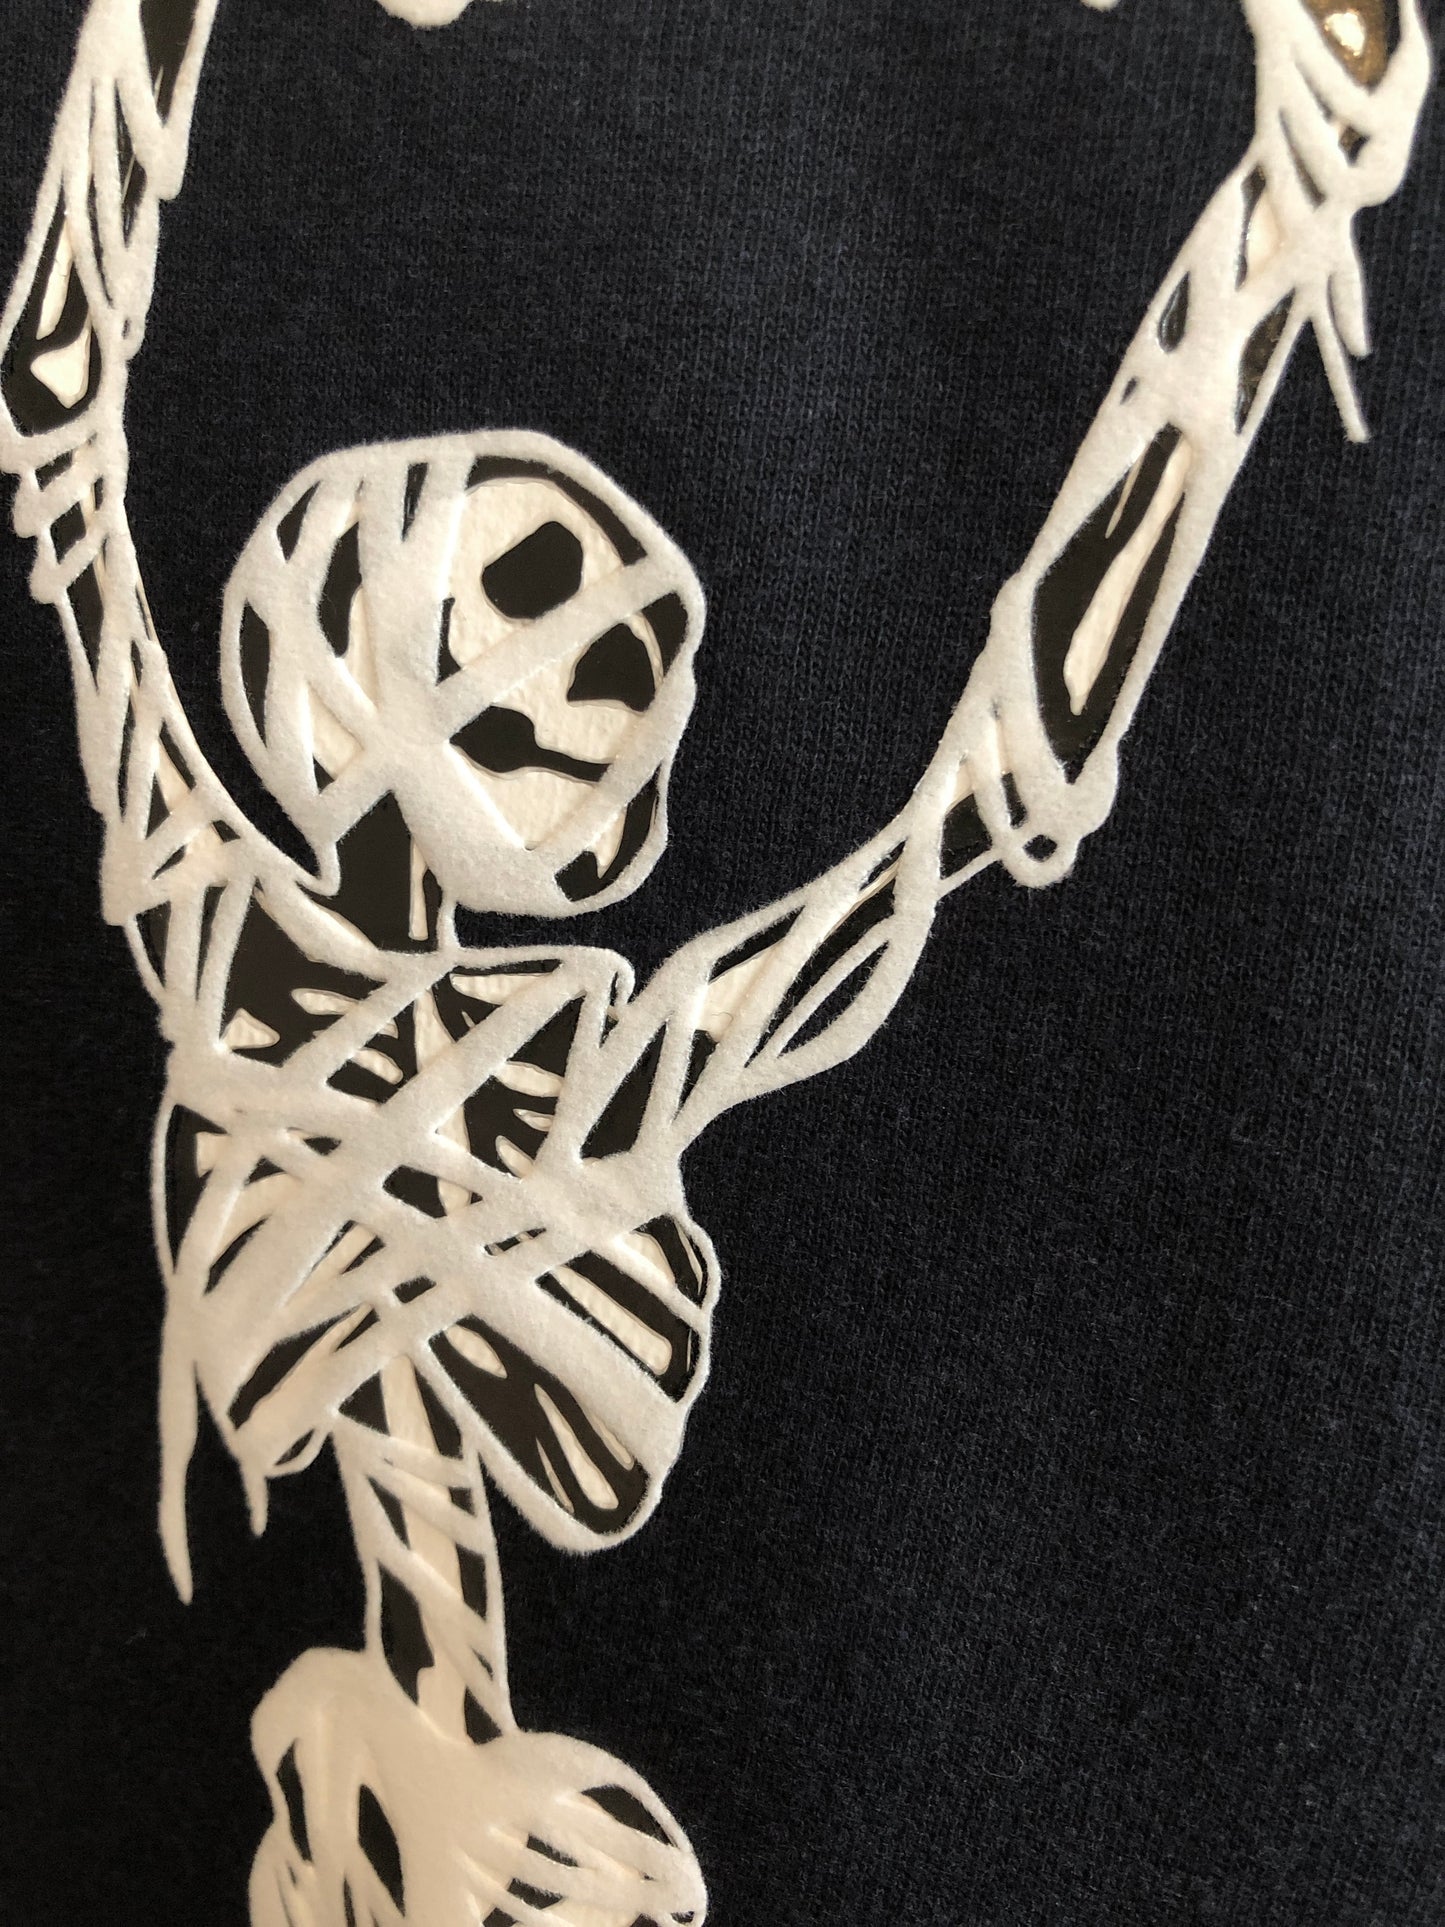 The Dancing "Mummy" skeleton sweatshirts